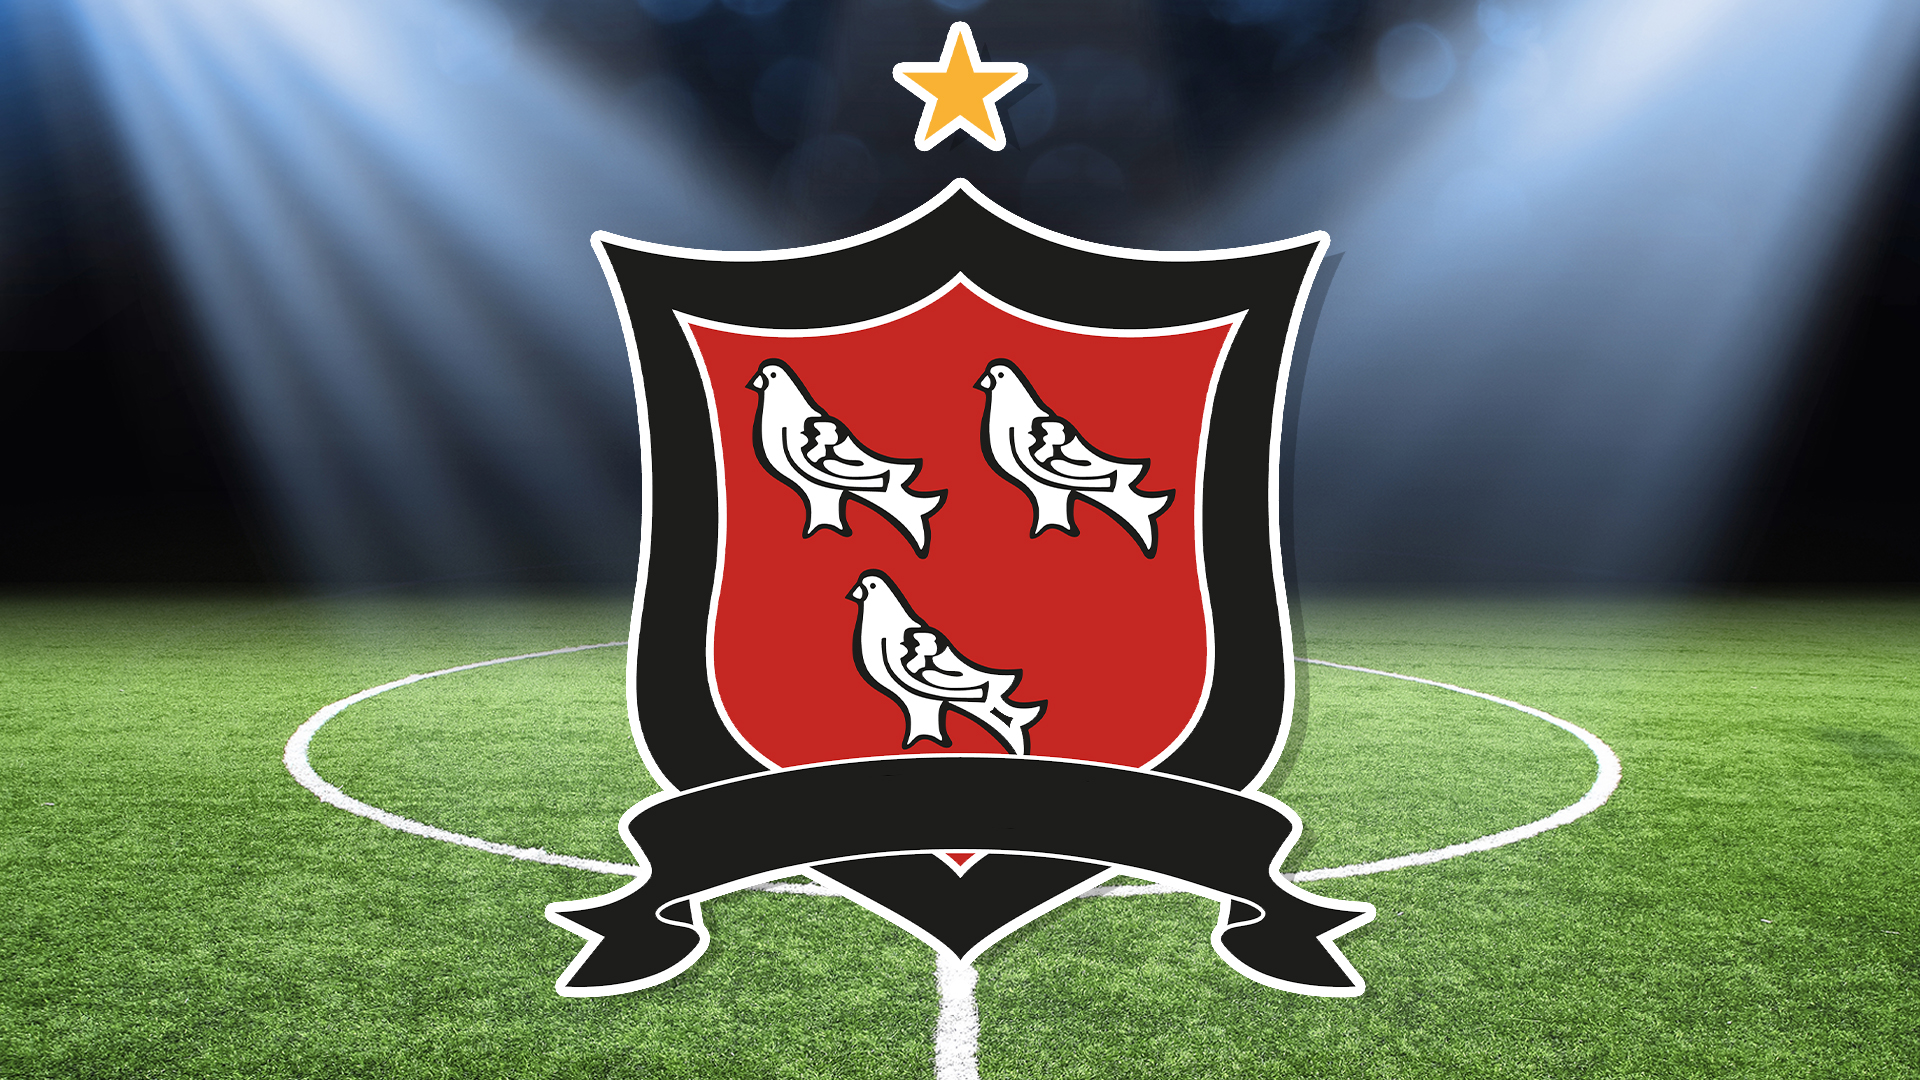 Football logo 10